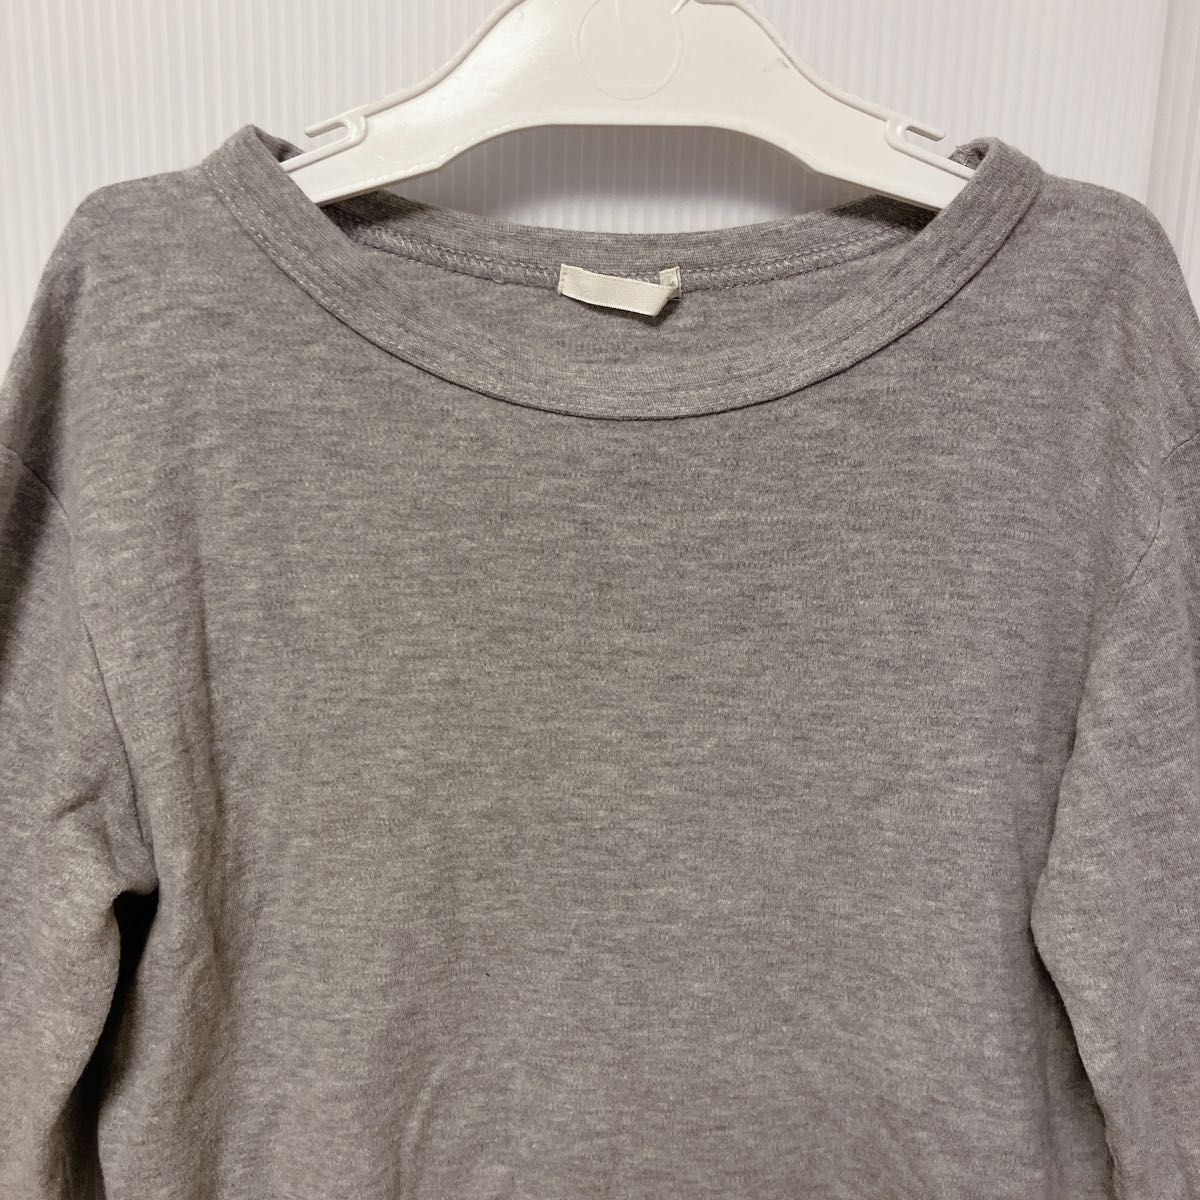 124【GU】Tシャツ 140 シンプル 無地 綿 レーヨン 長袖 カジュアル